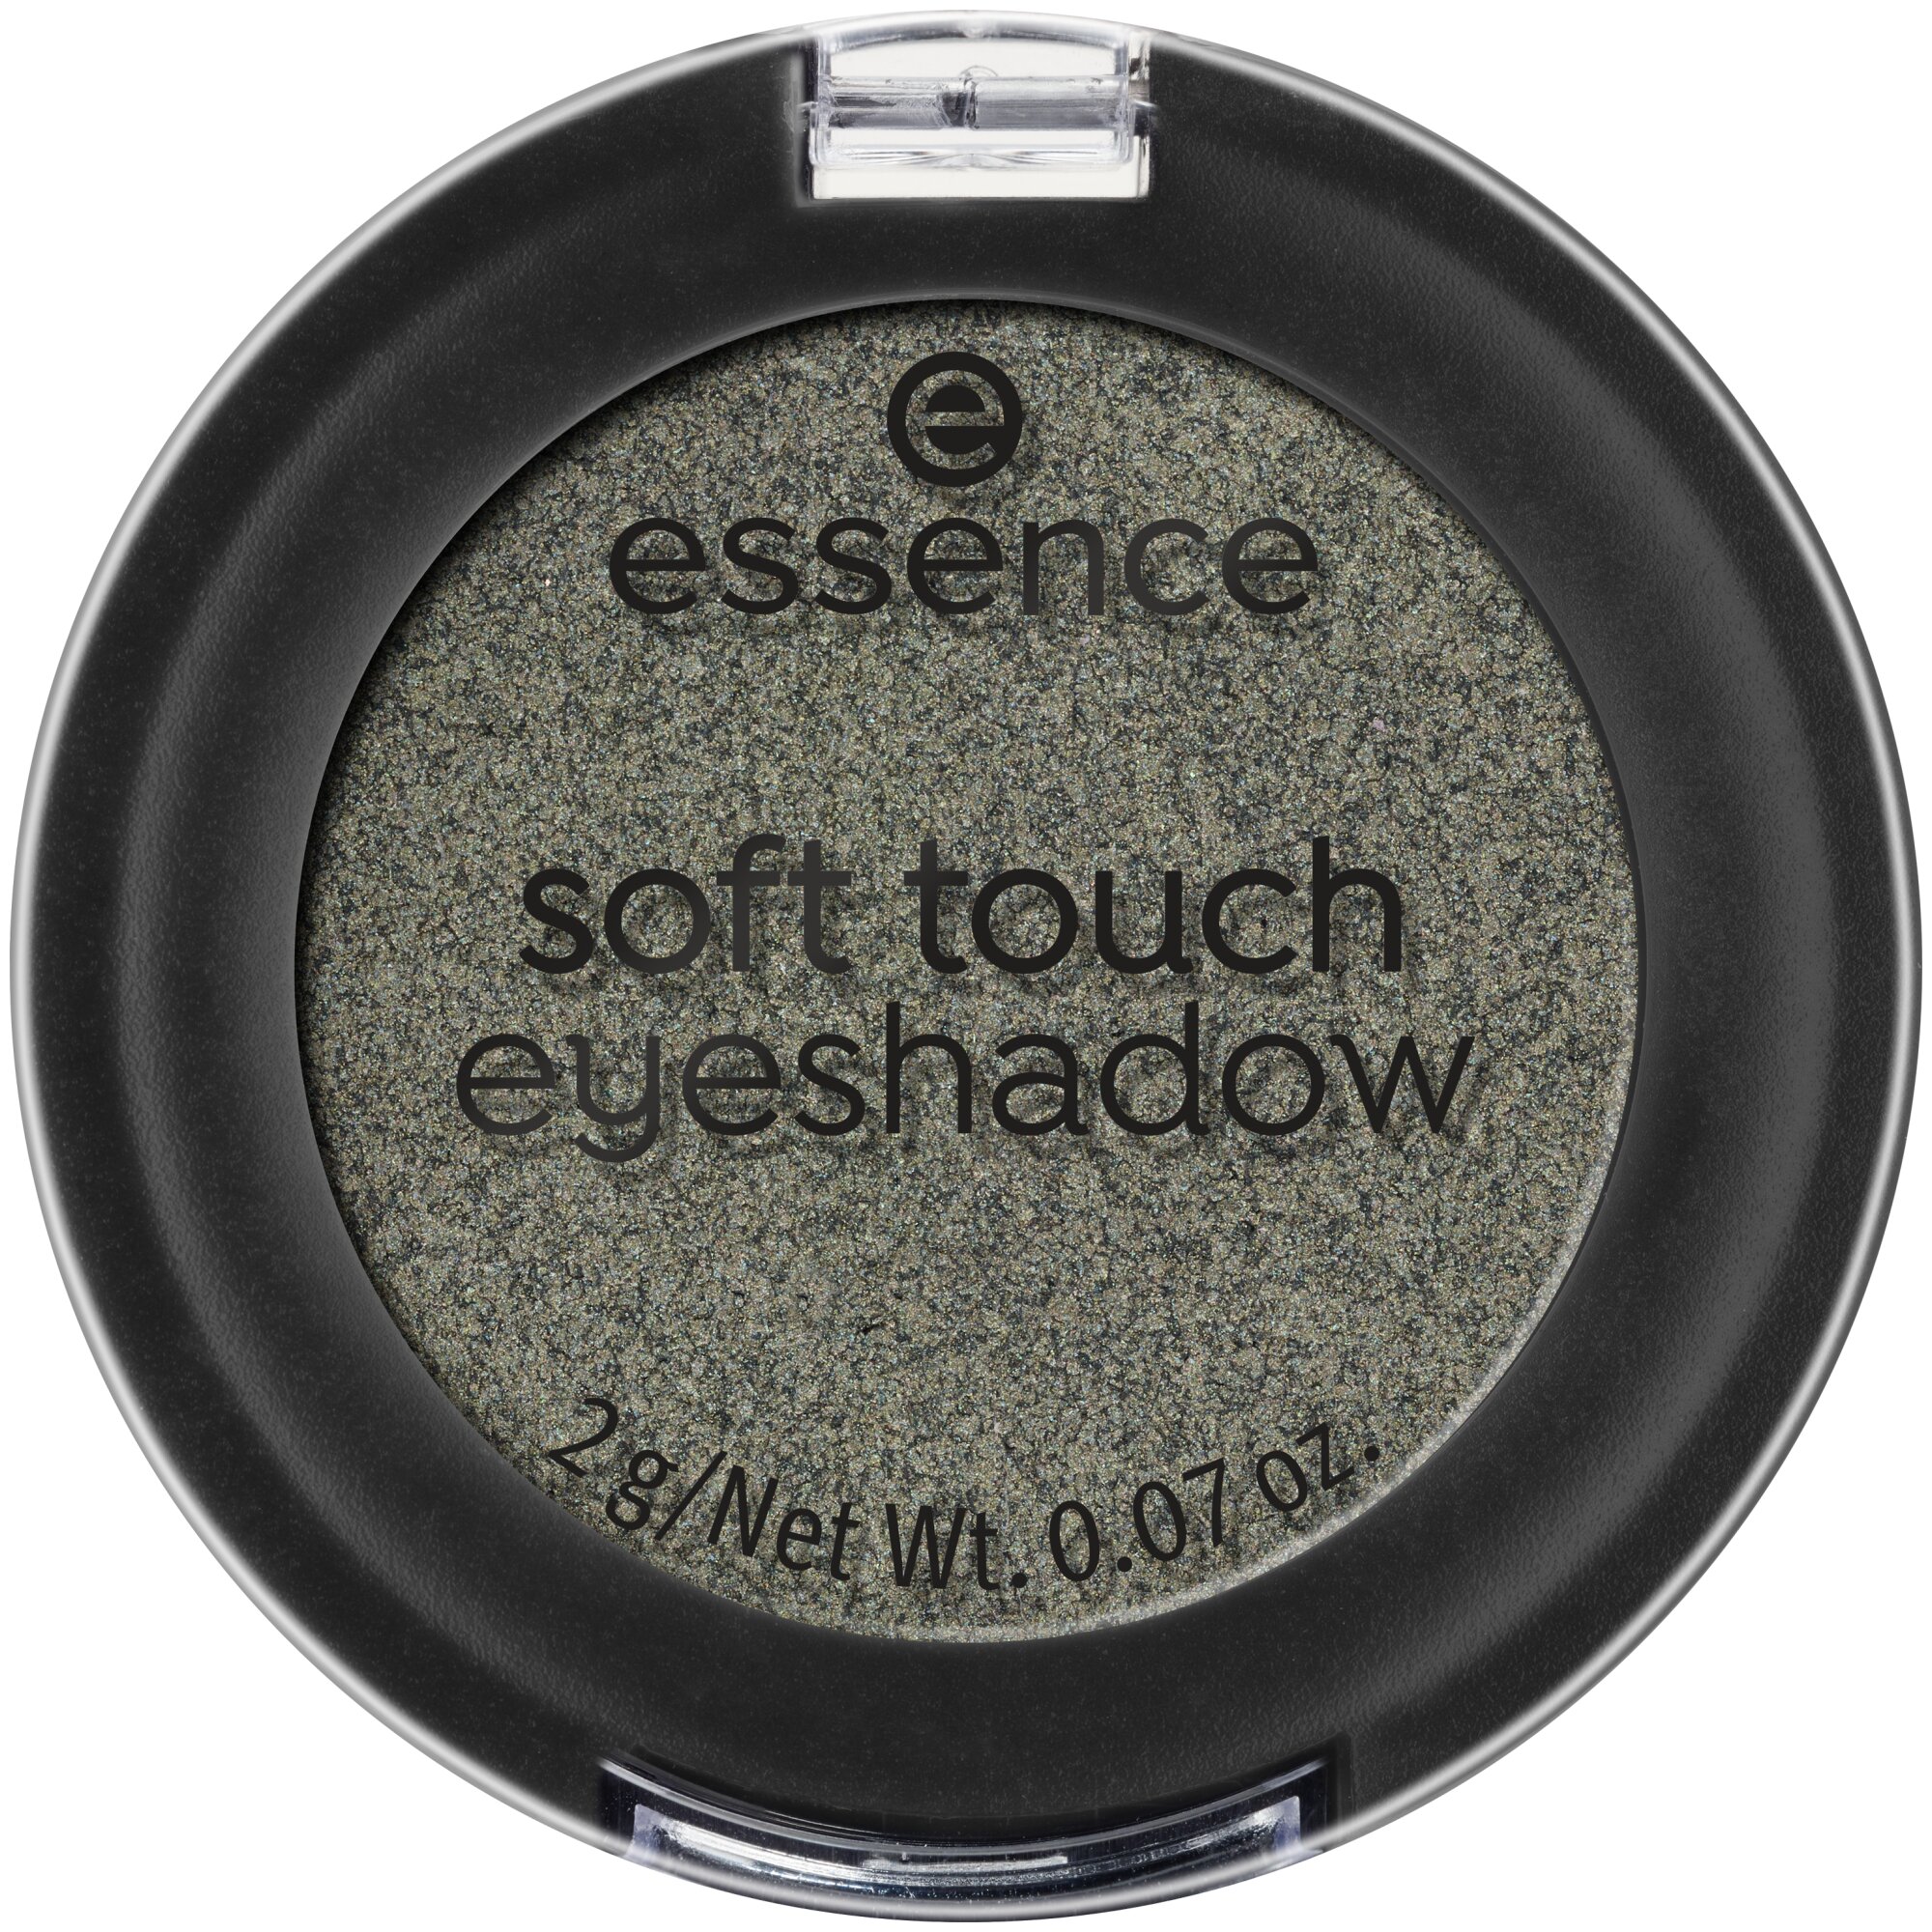 Fard de pleoape Soft Touch, 05 - Secret Woods, 2 g, Essence